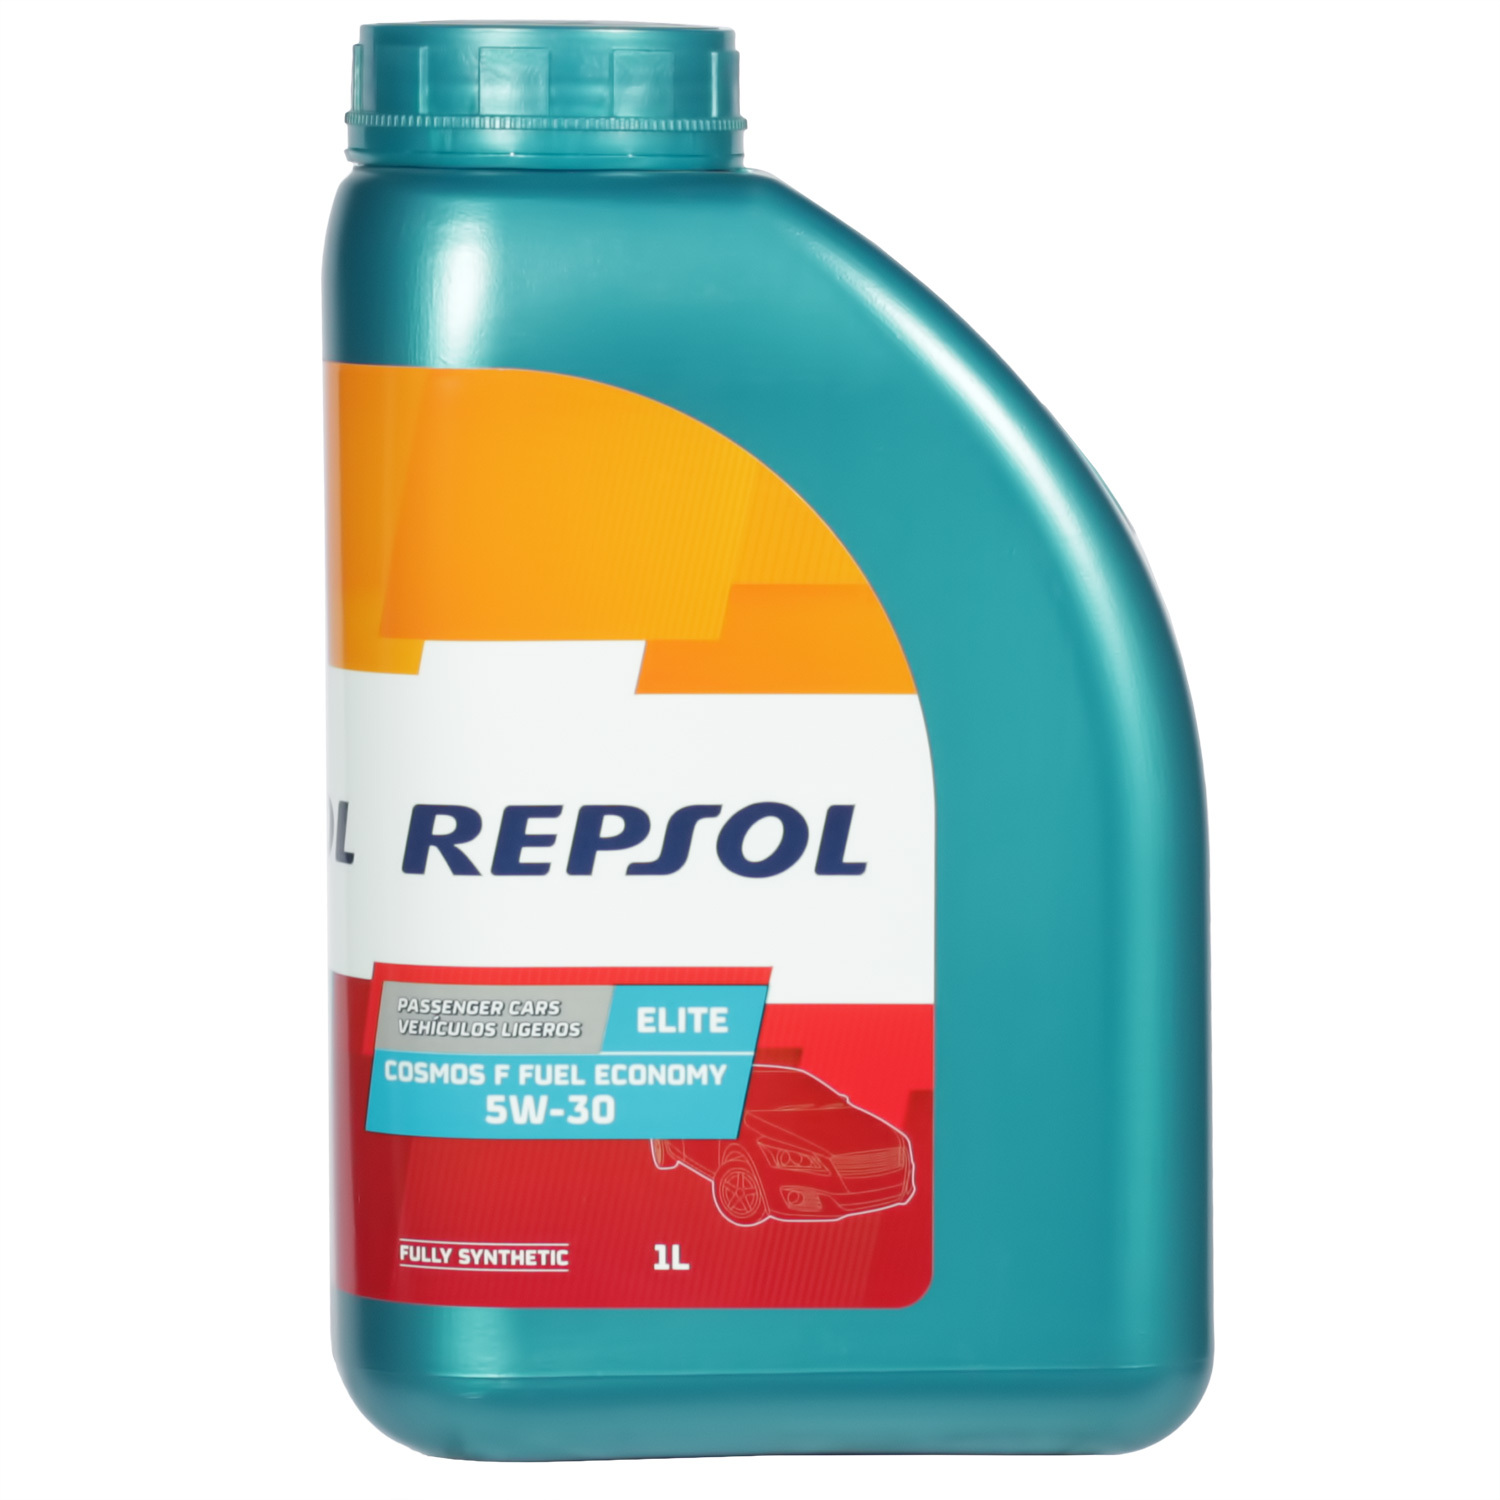 Repsol Моторное масло Repsol ELITE COSMOS F FUEL ECONOMY 5W-30, 1 л